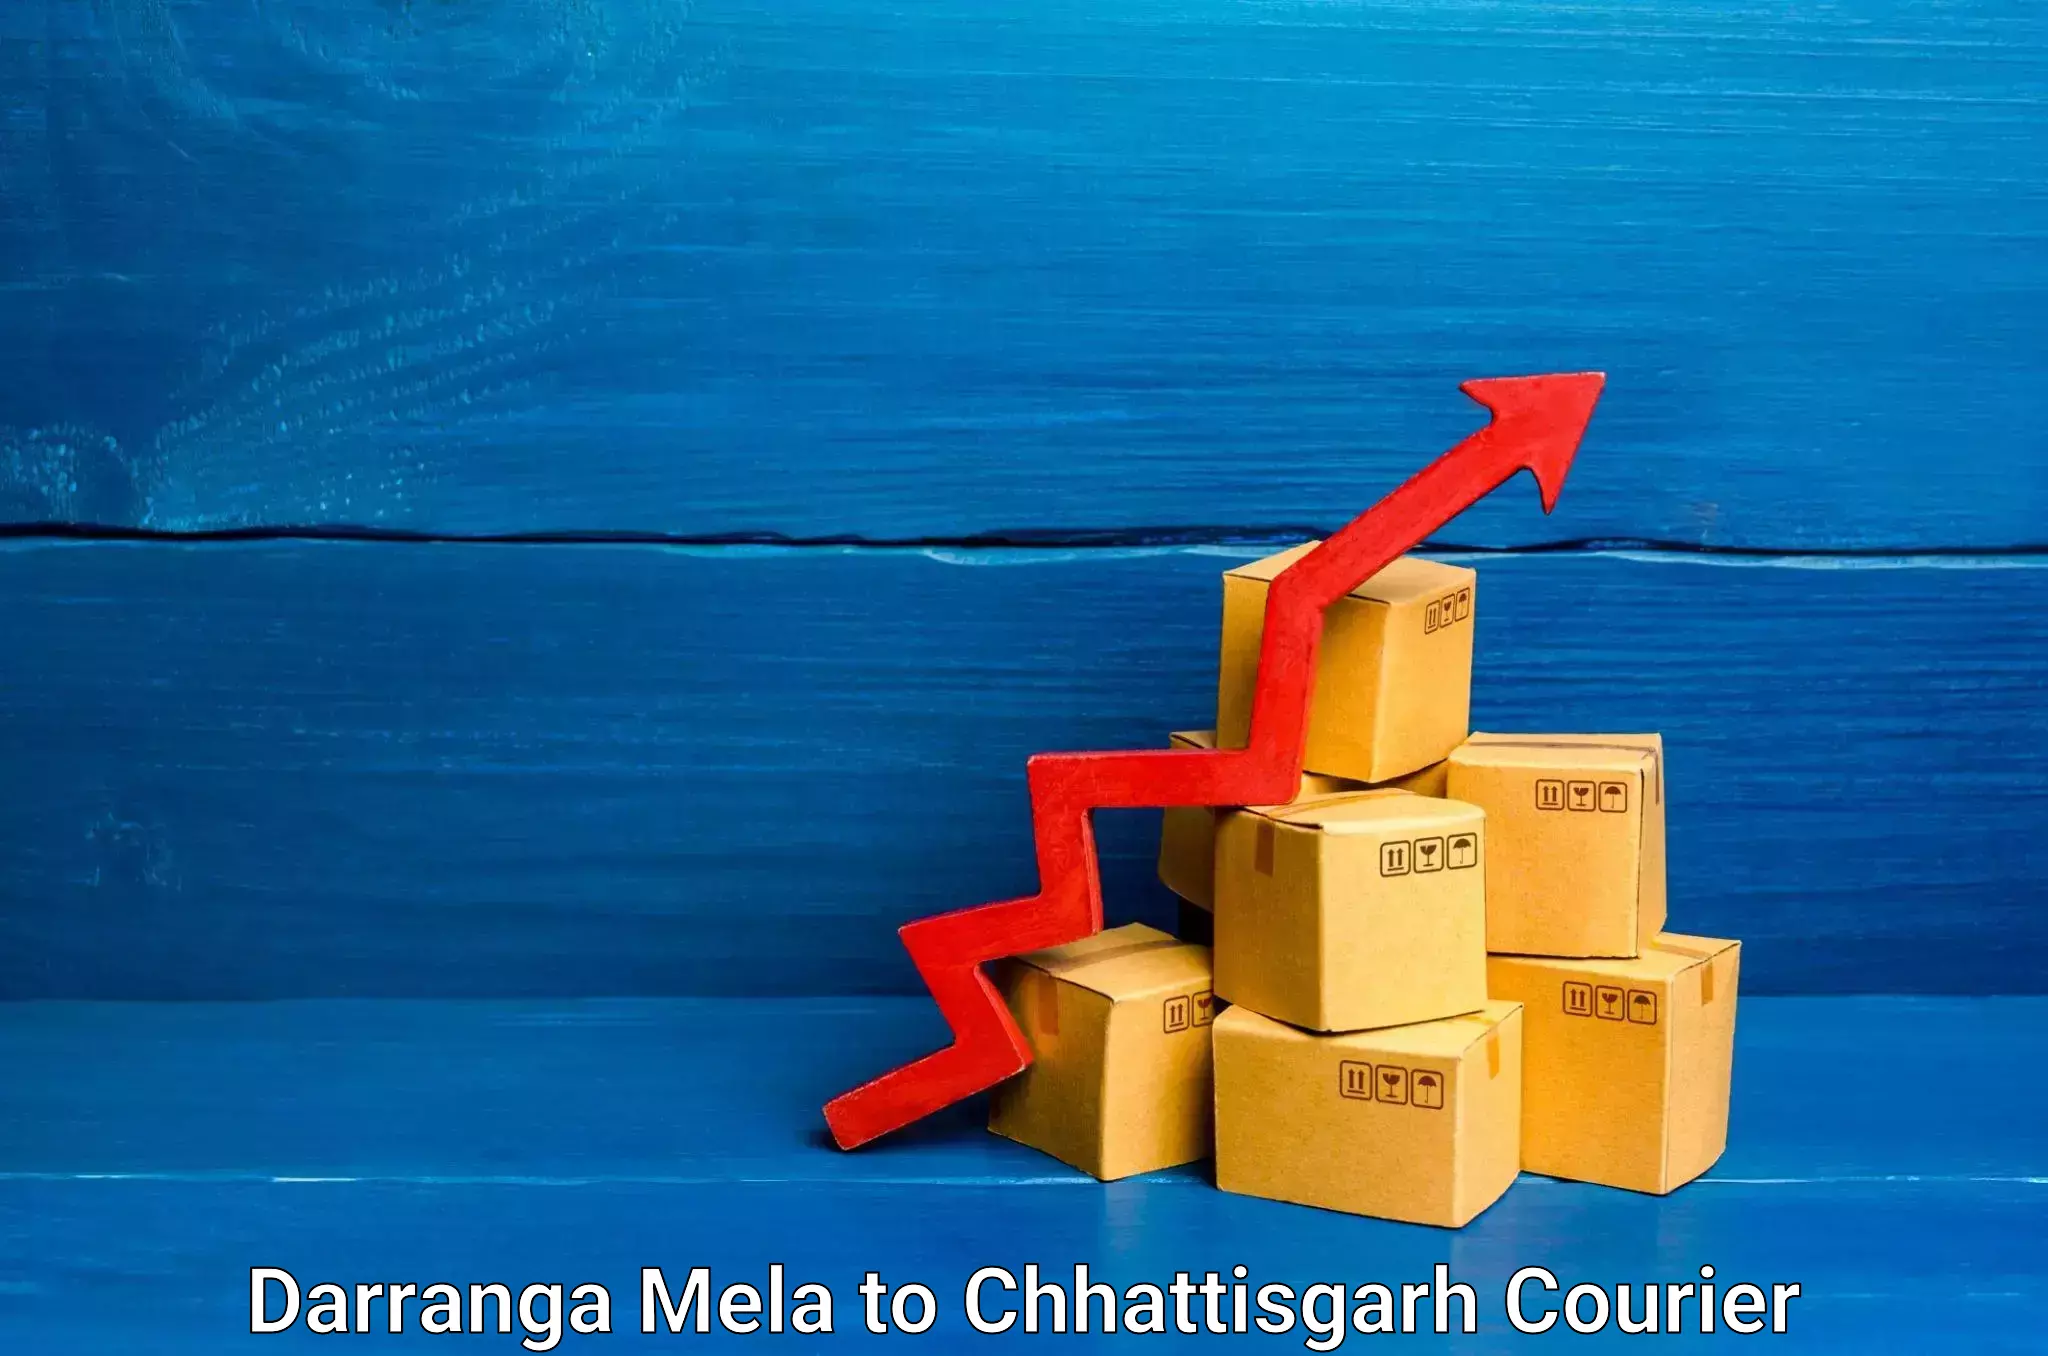 Express delivery solutions Darranga Mela to Chhattisgarh